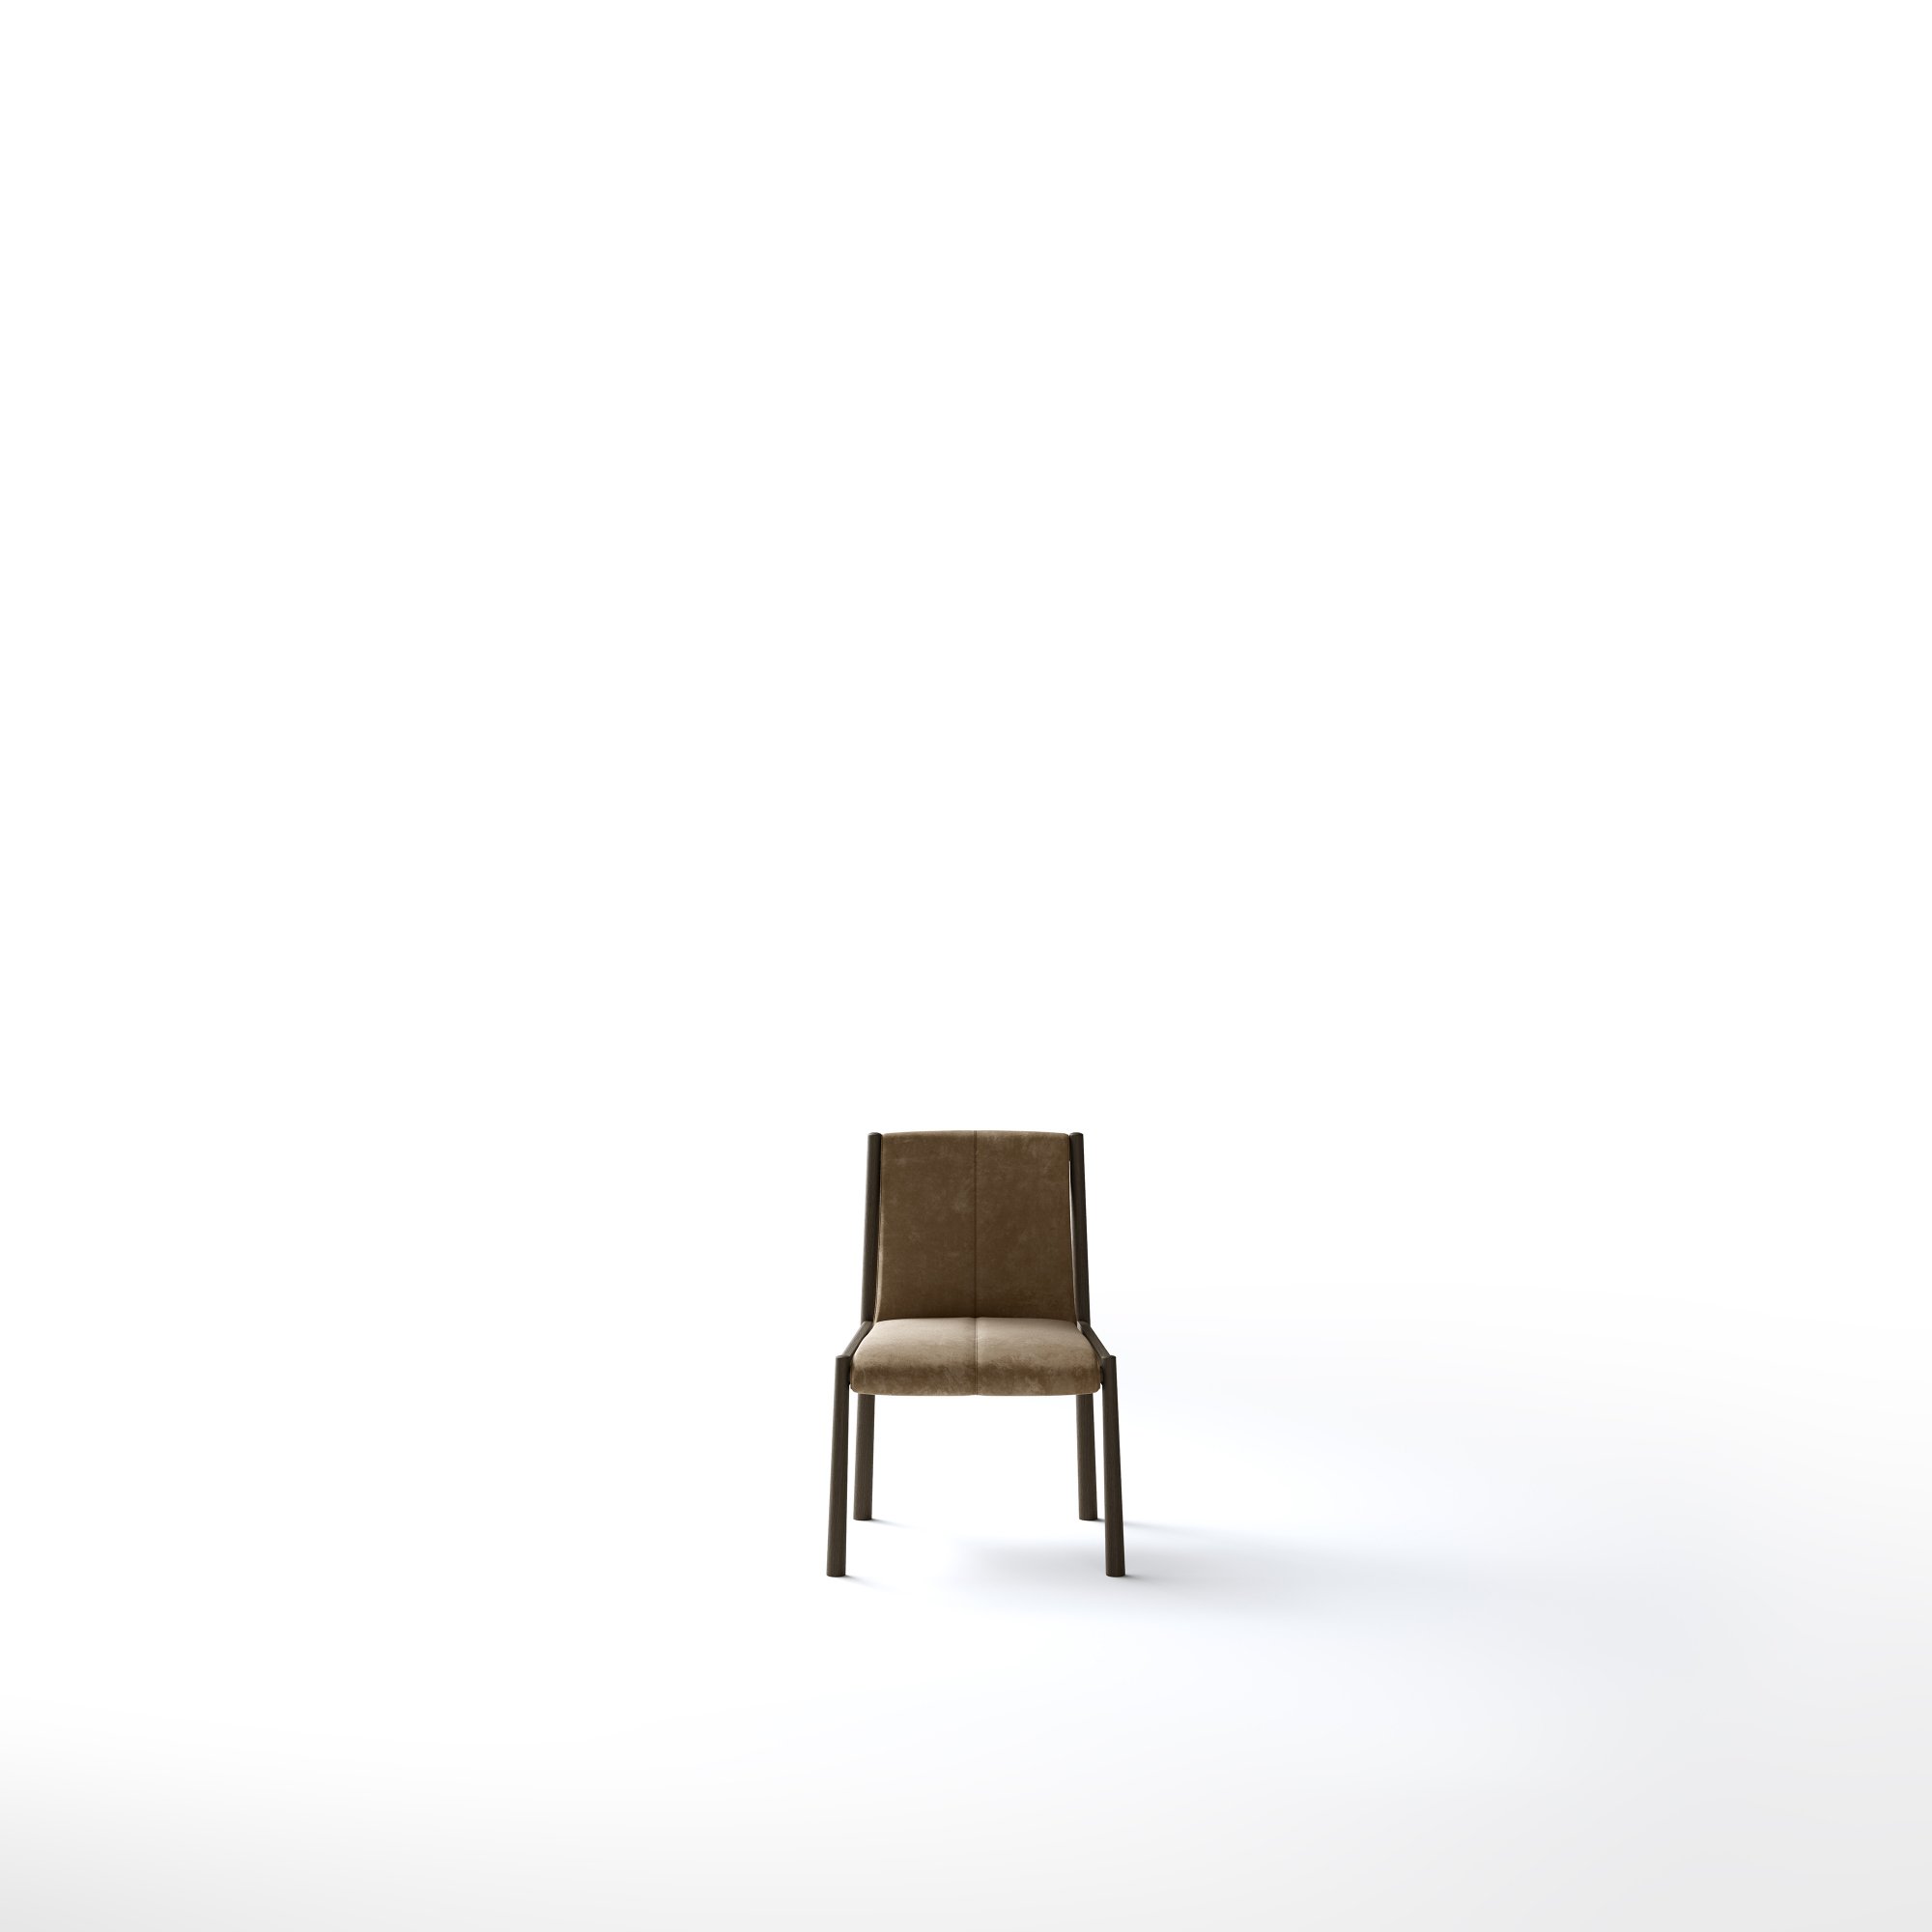 Product_Seating_Manfredi_Vanity_03.jpg